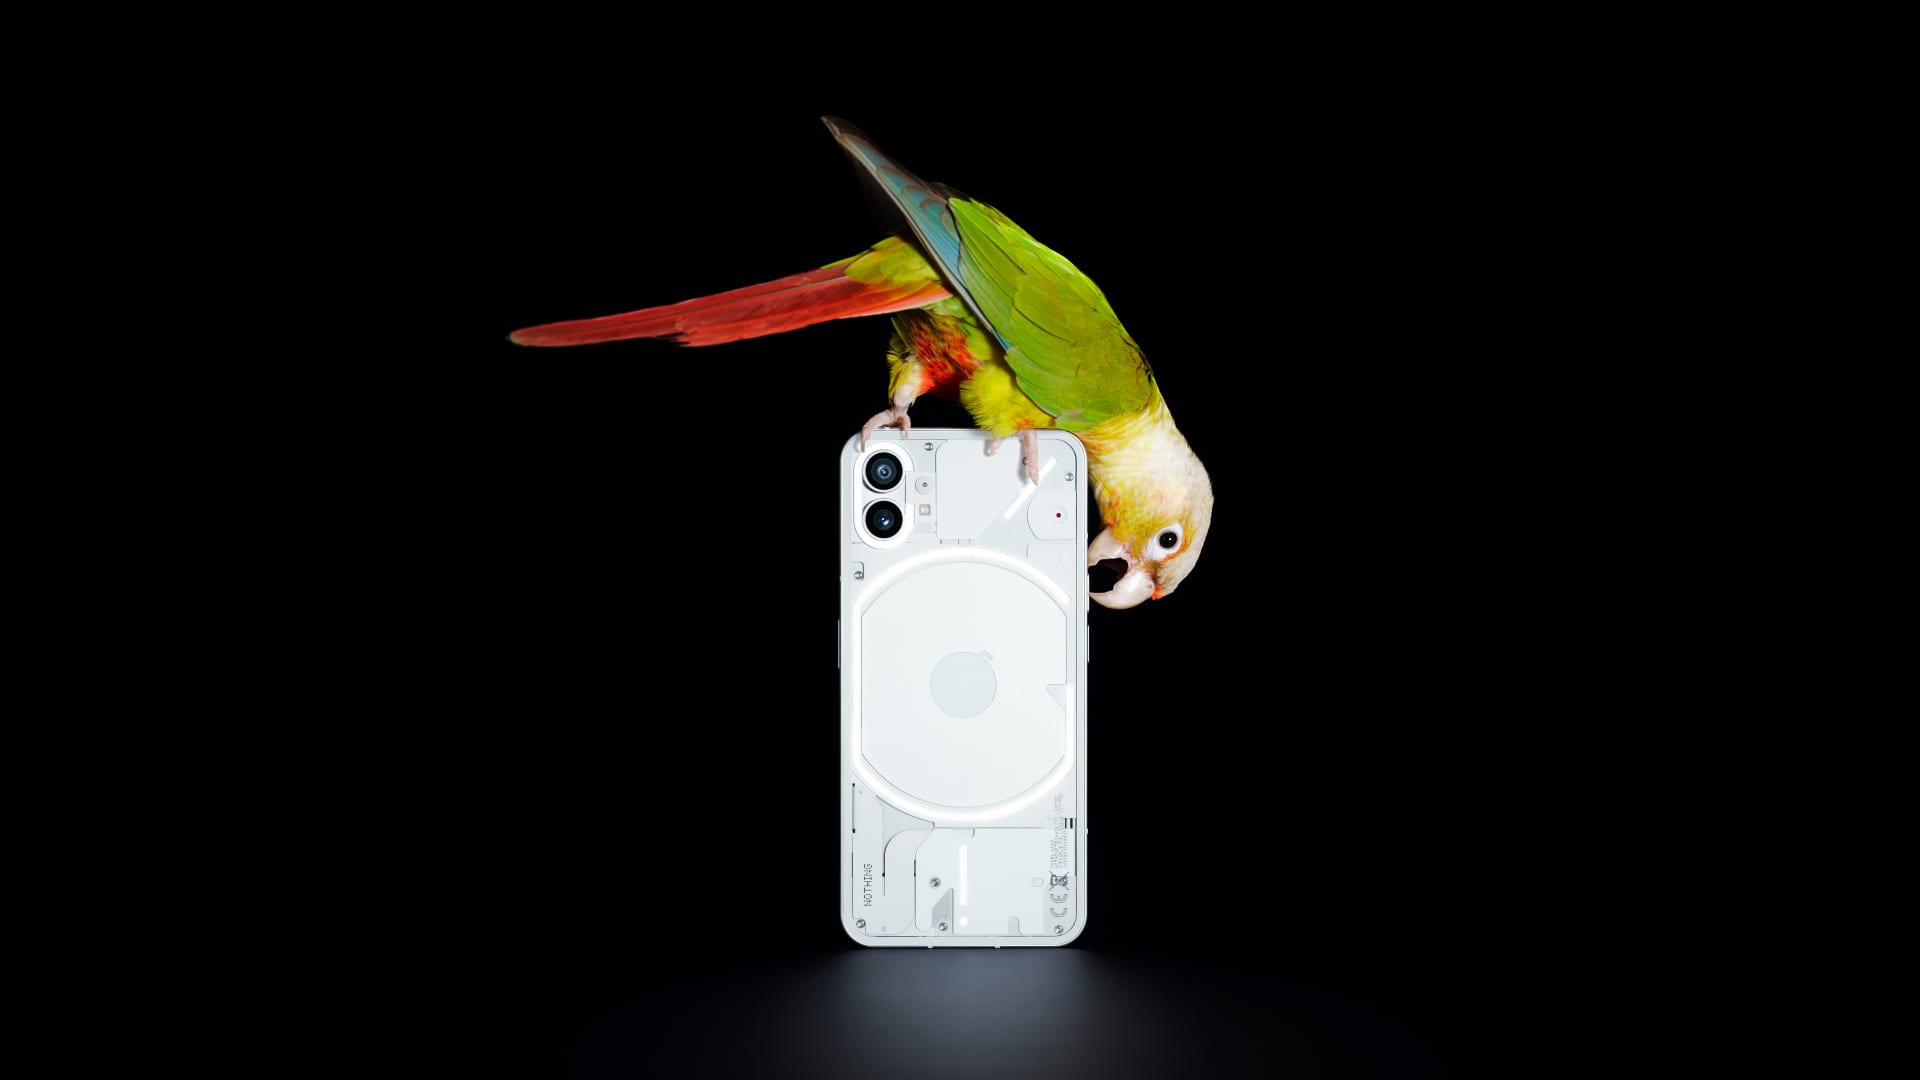 Carl Pei의 Nothing, 미국에서 iPhone을 대체할 스마트폰 출시 계획